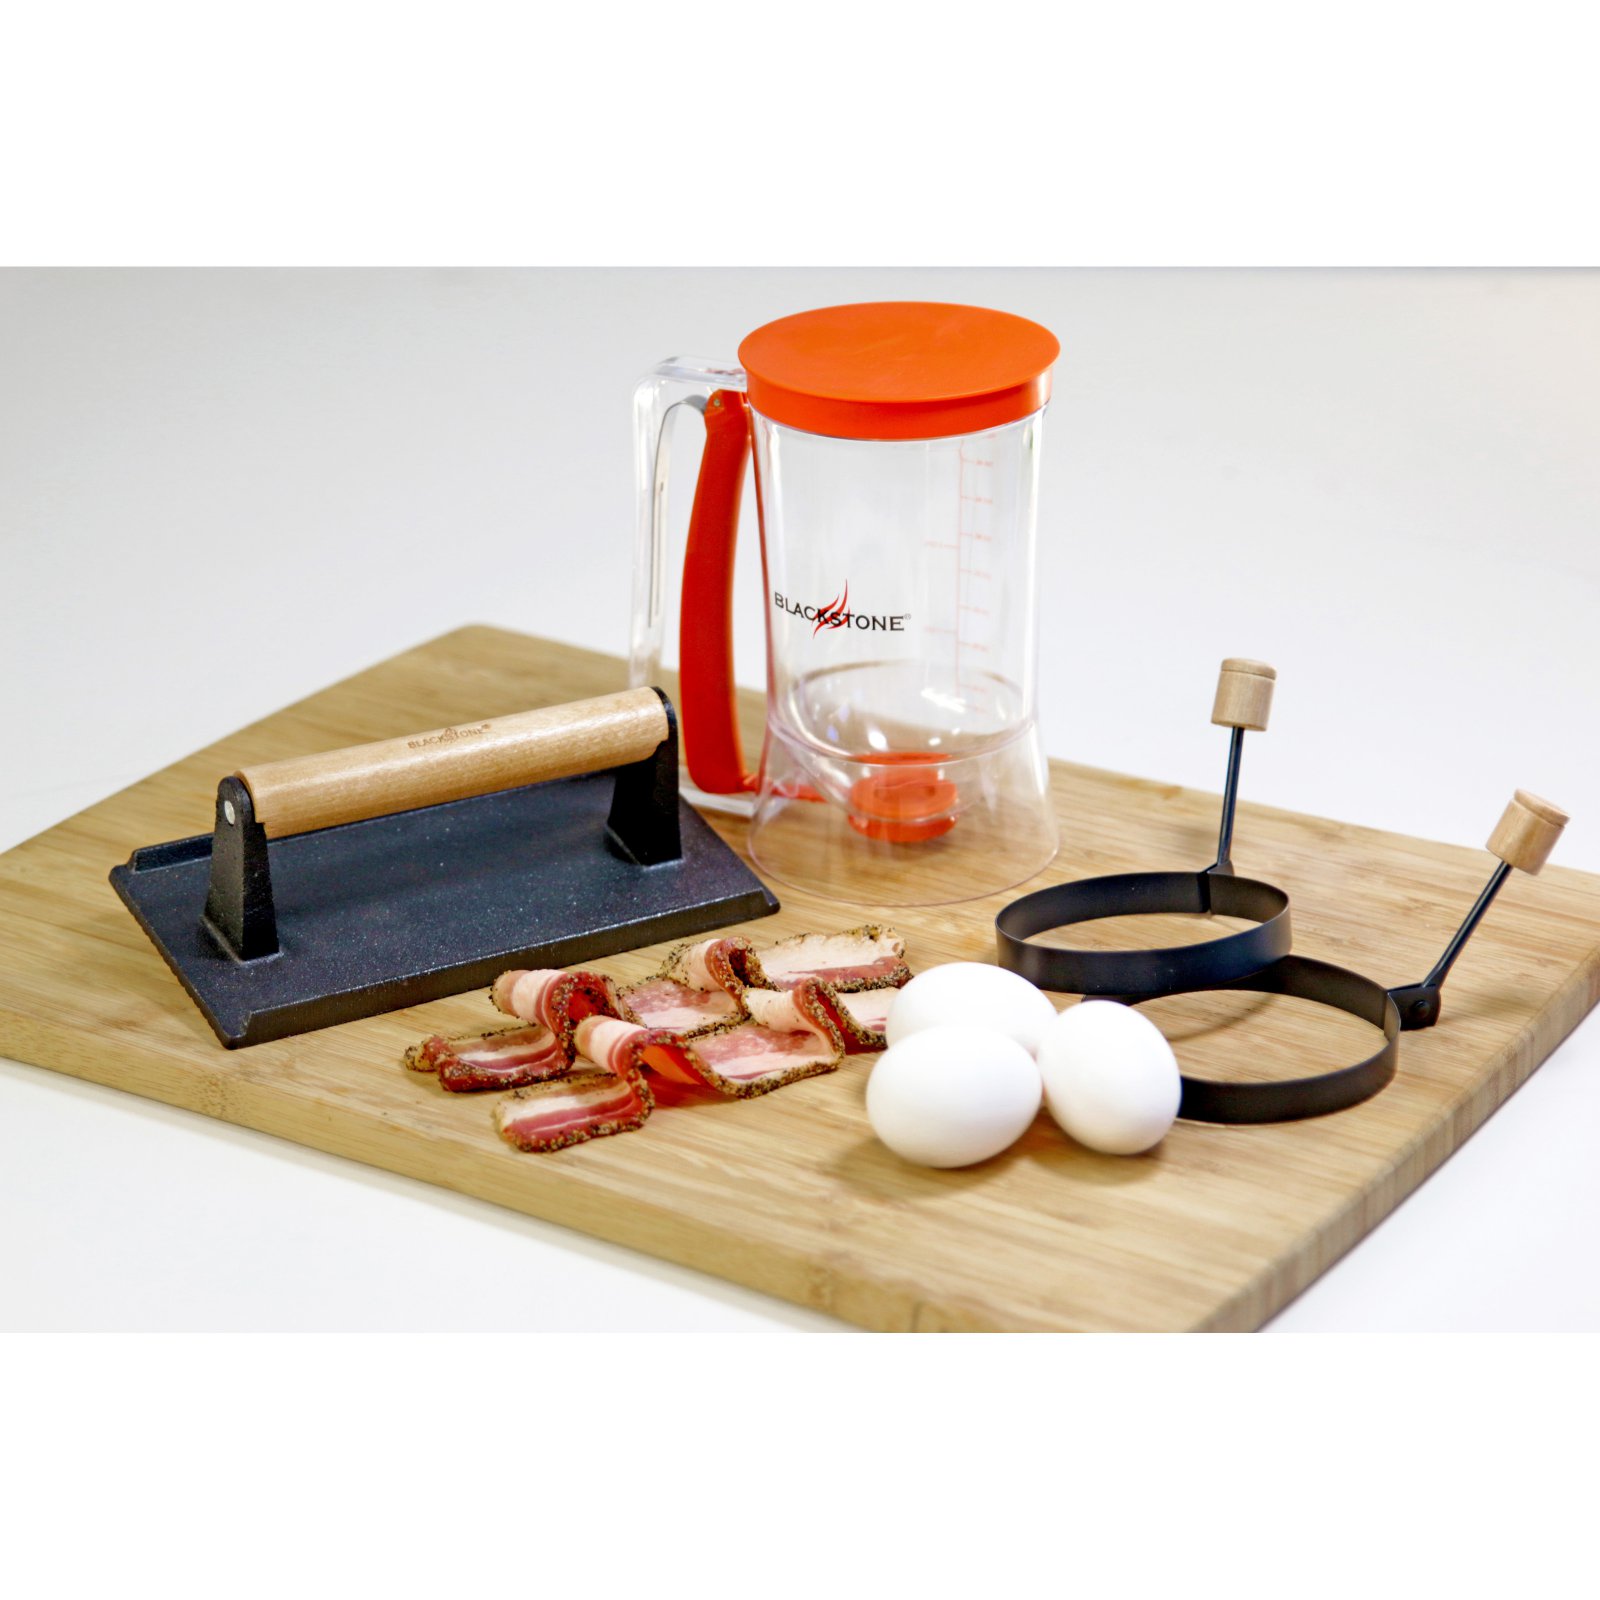 Blackstone 4-Piece Griddle Breakfast Kit for Pancakes, Eggs, Bacon